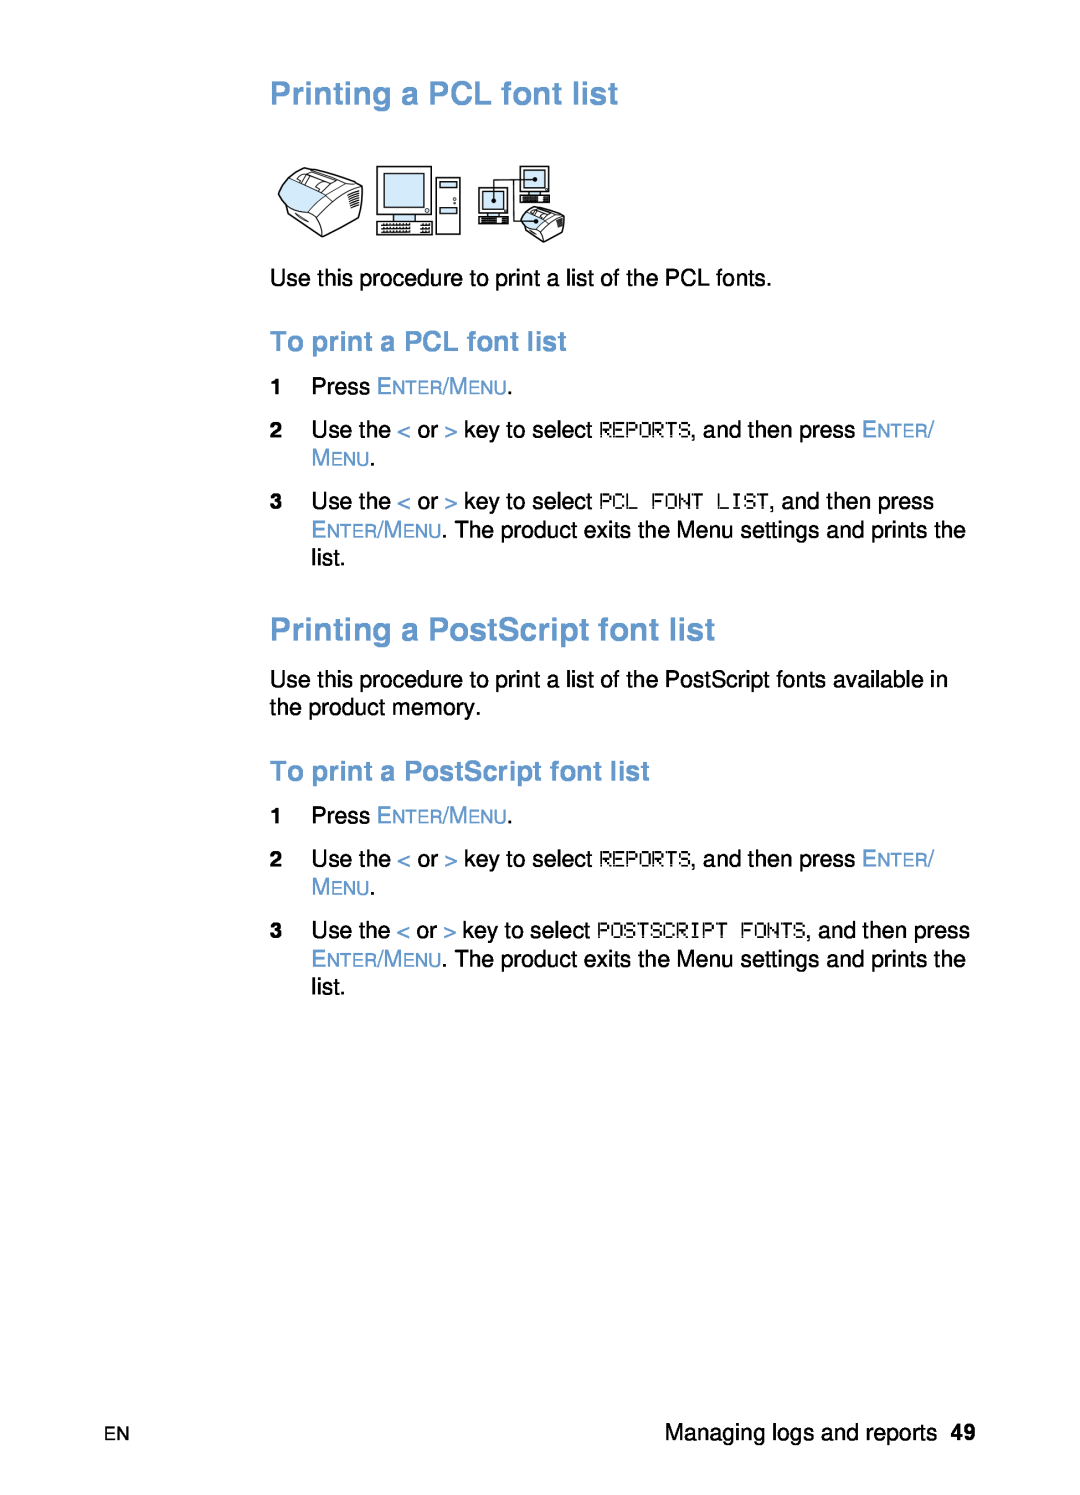 HP 3200 manual Printing a PCL font list, Printing a PostScript font list, To print a PCL font list 